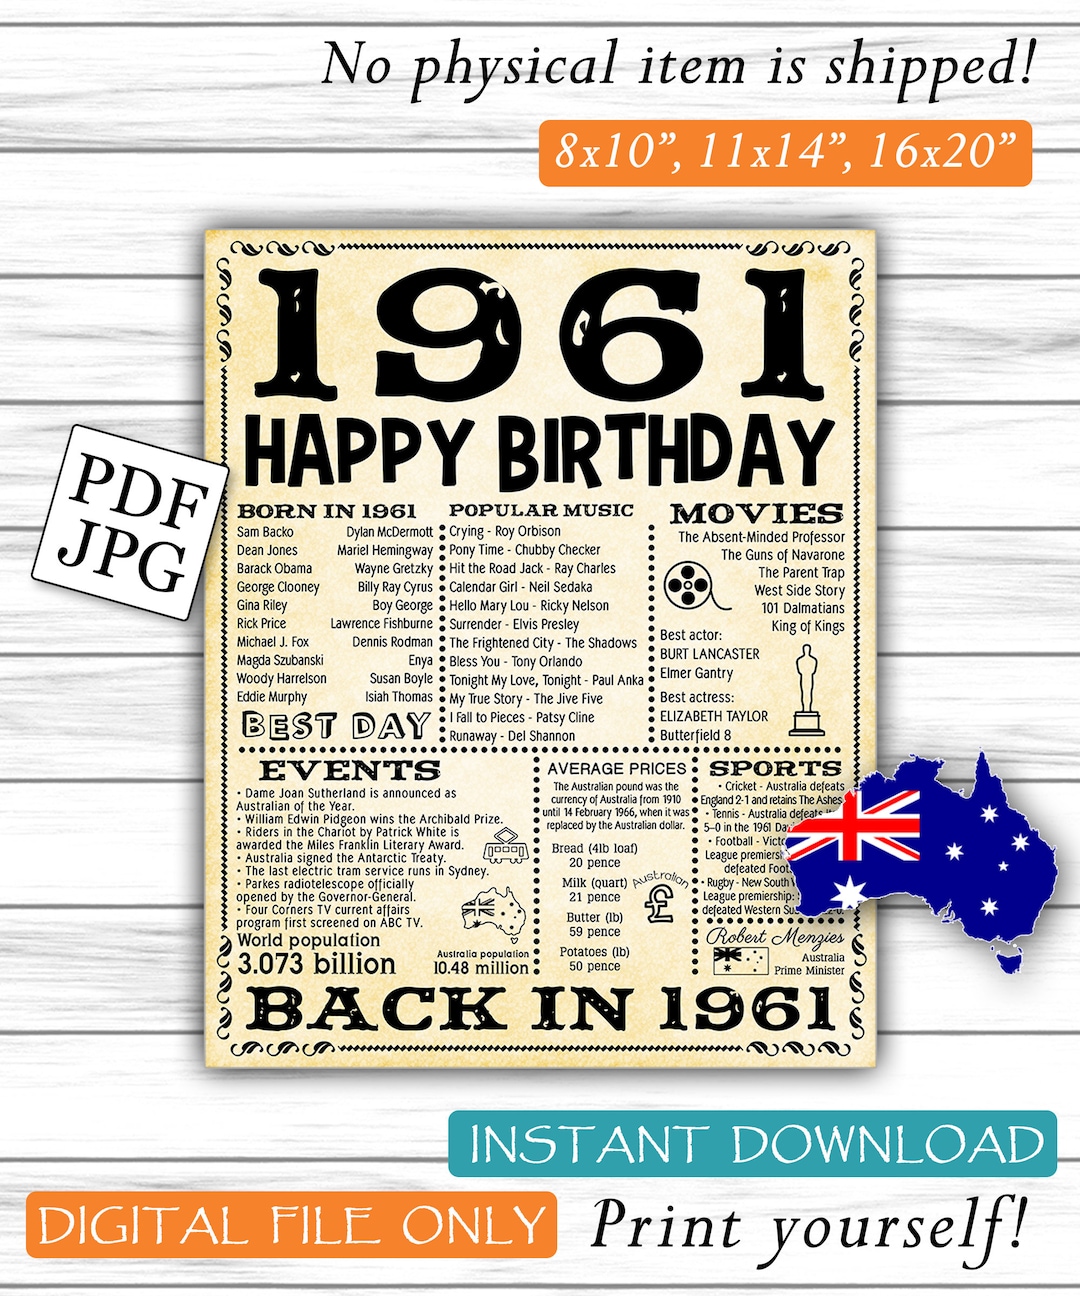 1961 Australian Version Fun Facts 1961 Birthday for